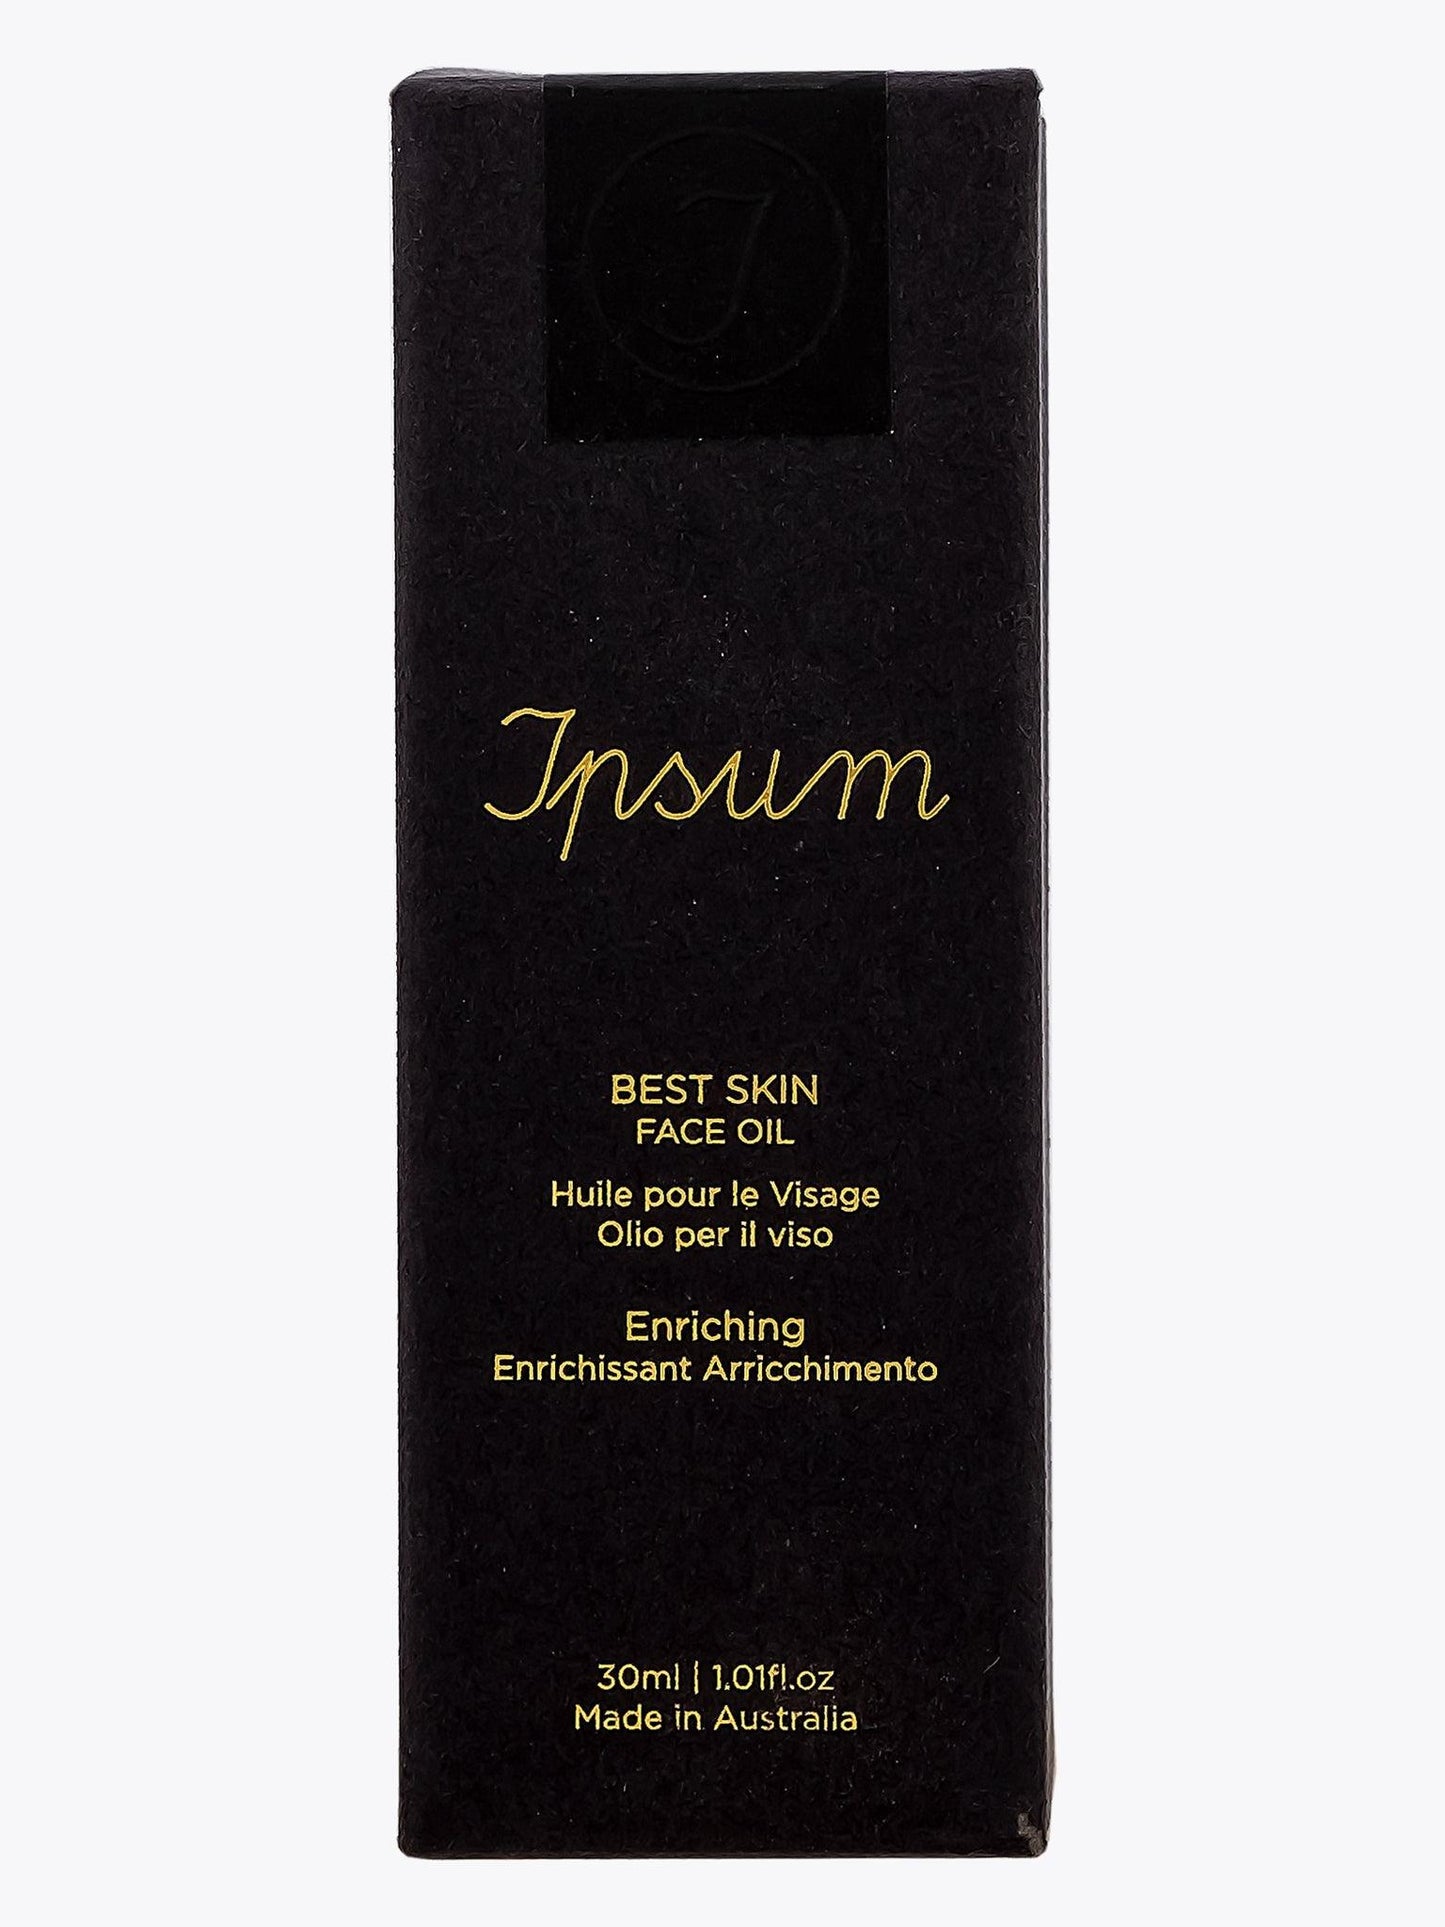 Ipsum Best Skin Face Oil Enriching 30ml - Apodep.com